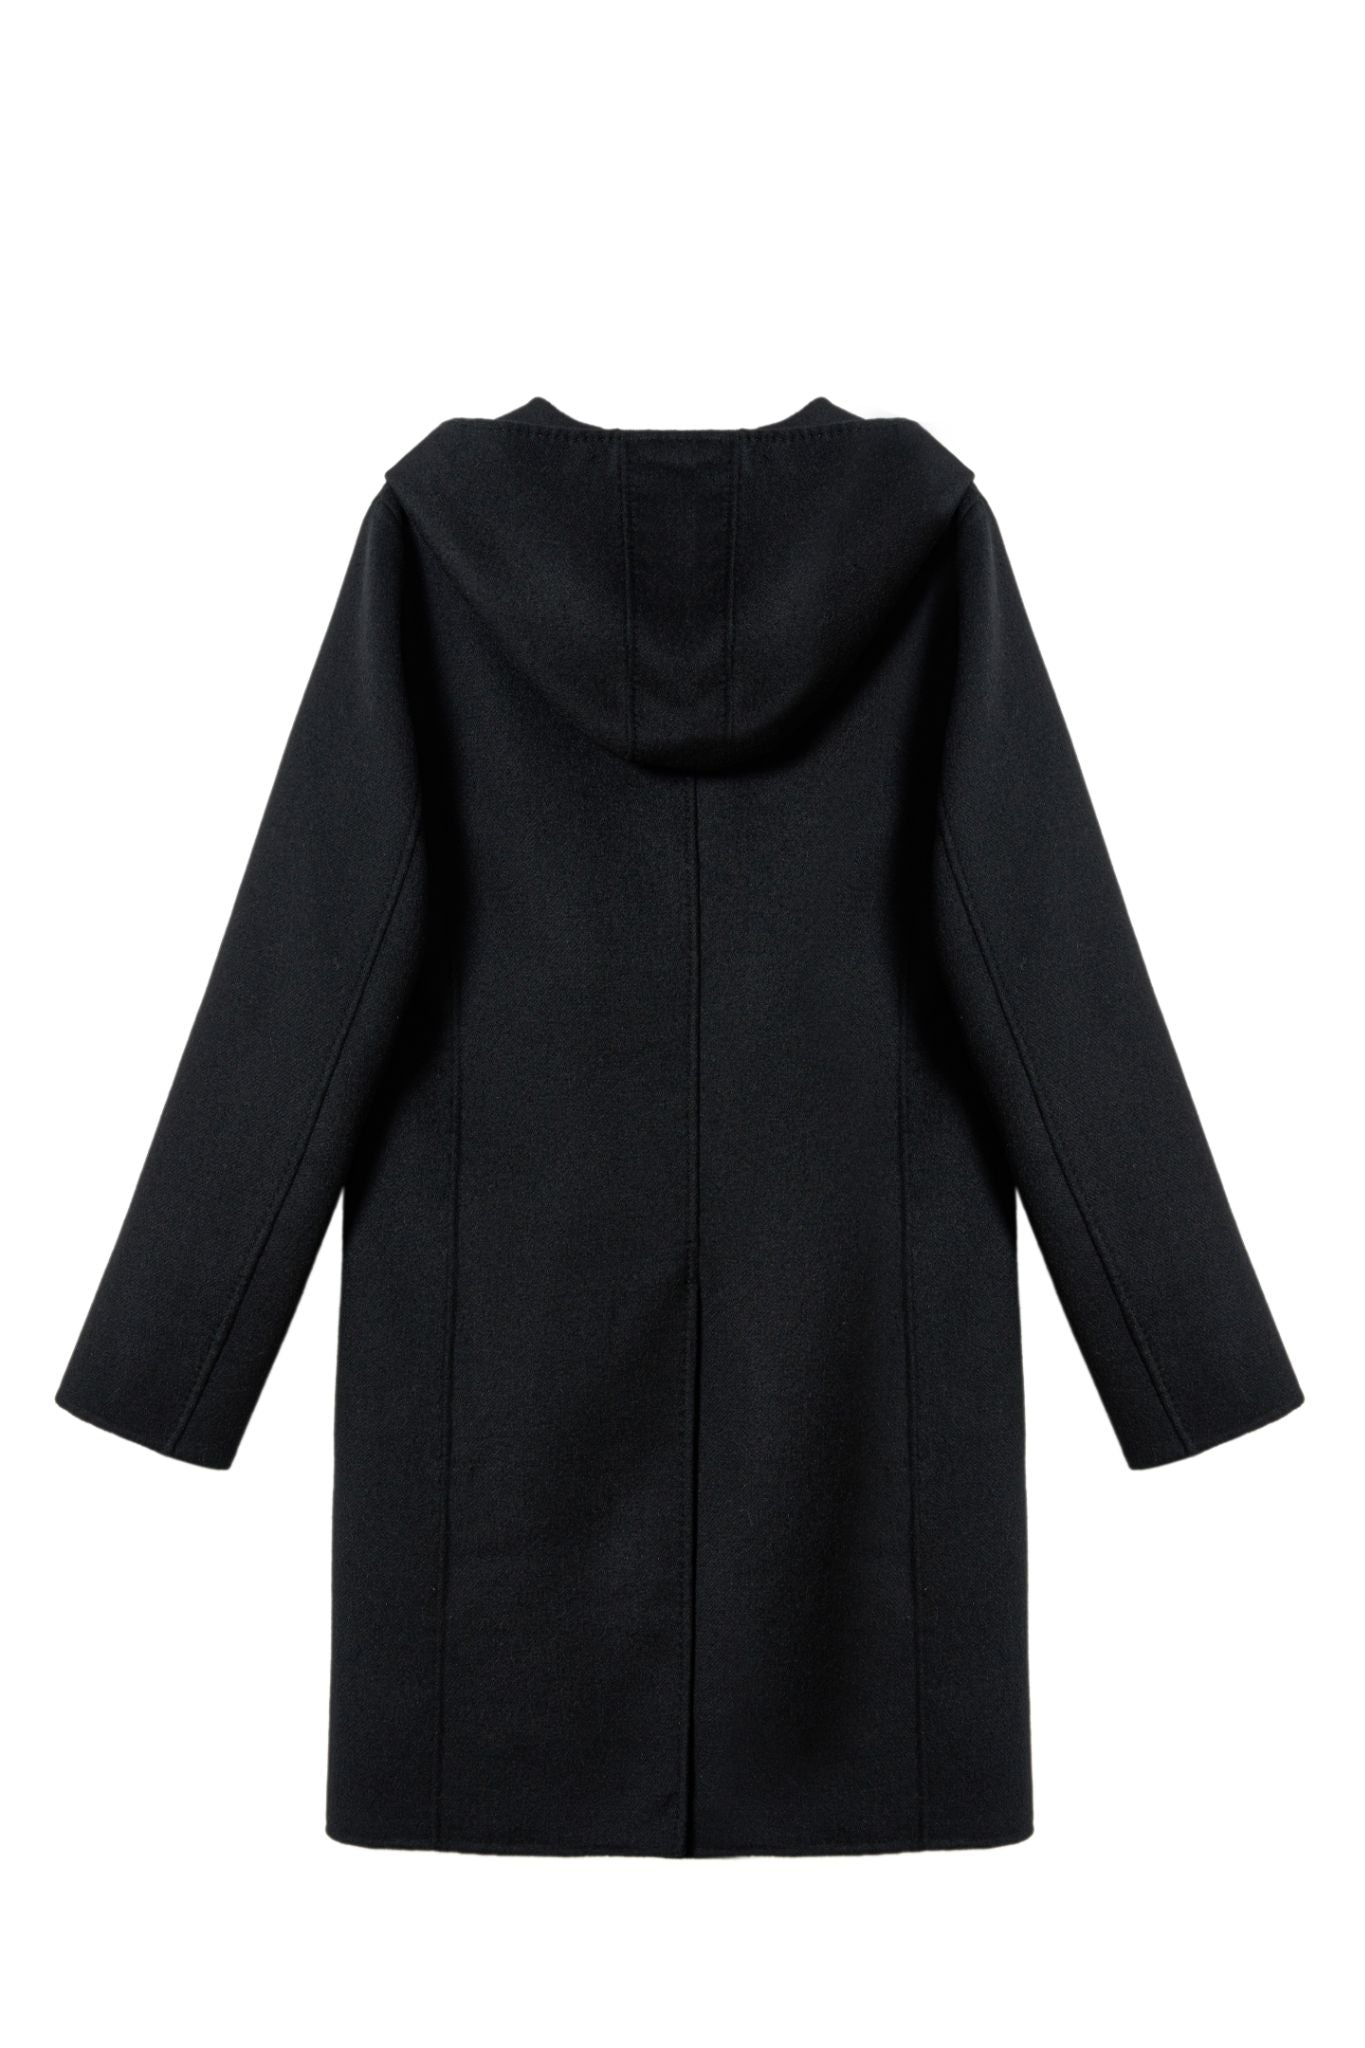 100% Wool Black Hooded Slim Fit Commuter Coat for Women